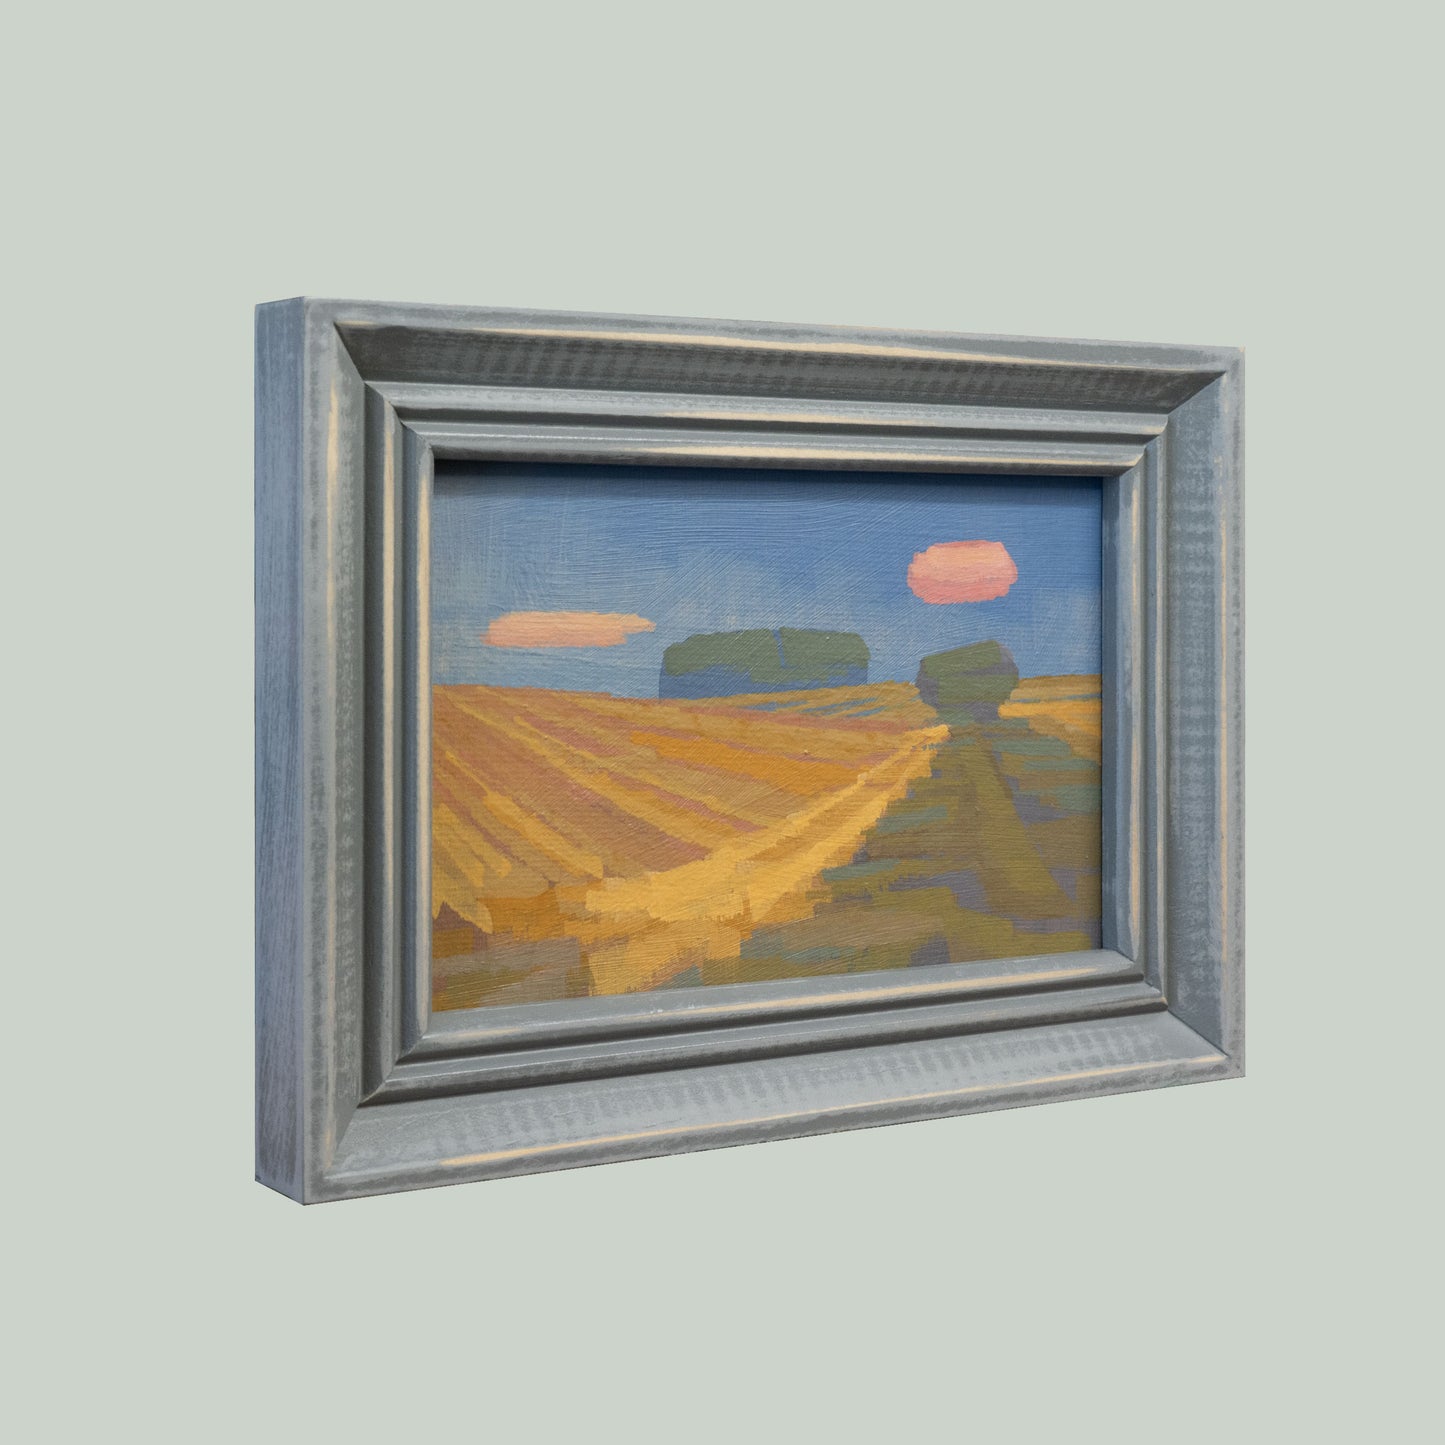 Original painting - "Gold Edge" - hand painted - acrylic painting - 10x15 cm - landscape picture - unique piece - with frame